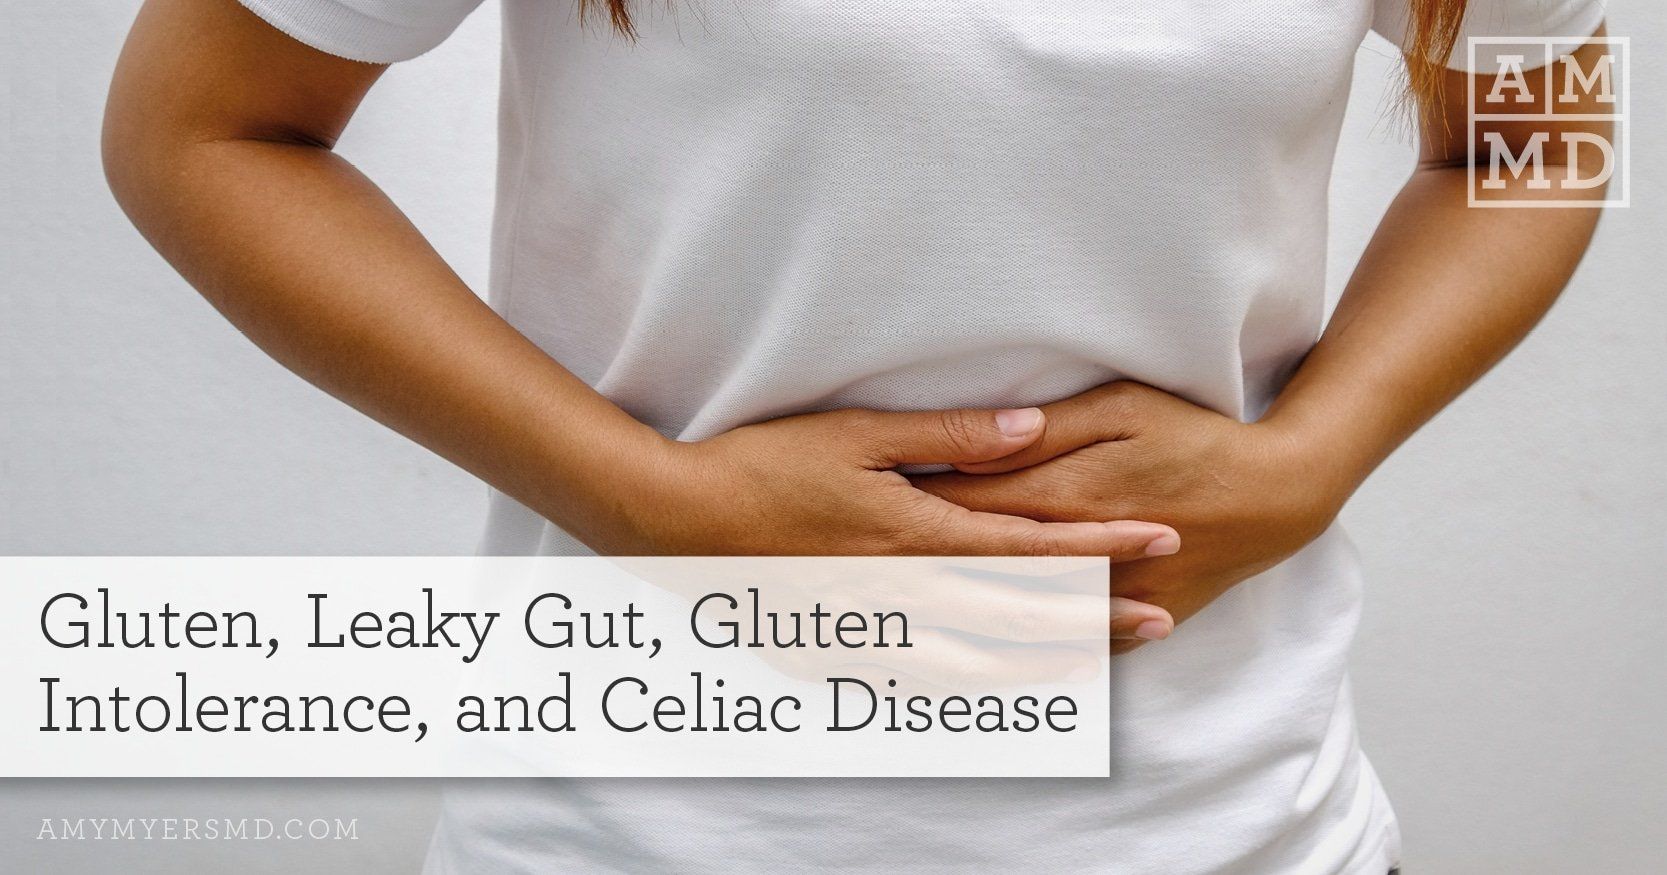 Gluten, Leaky Gut, Gluten Intolerance, and Celiac Disease ...